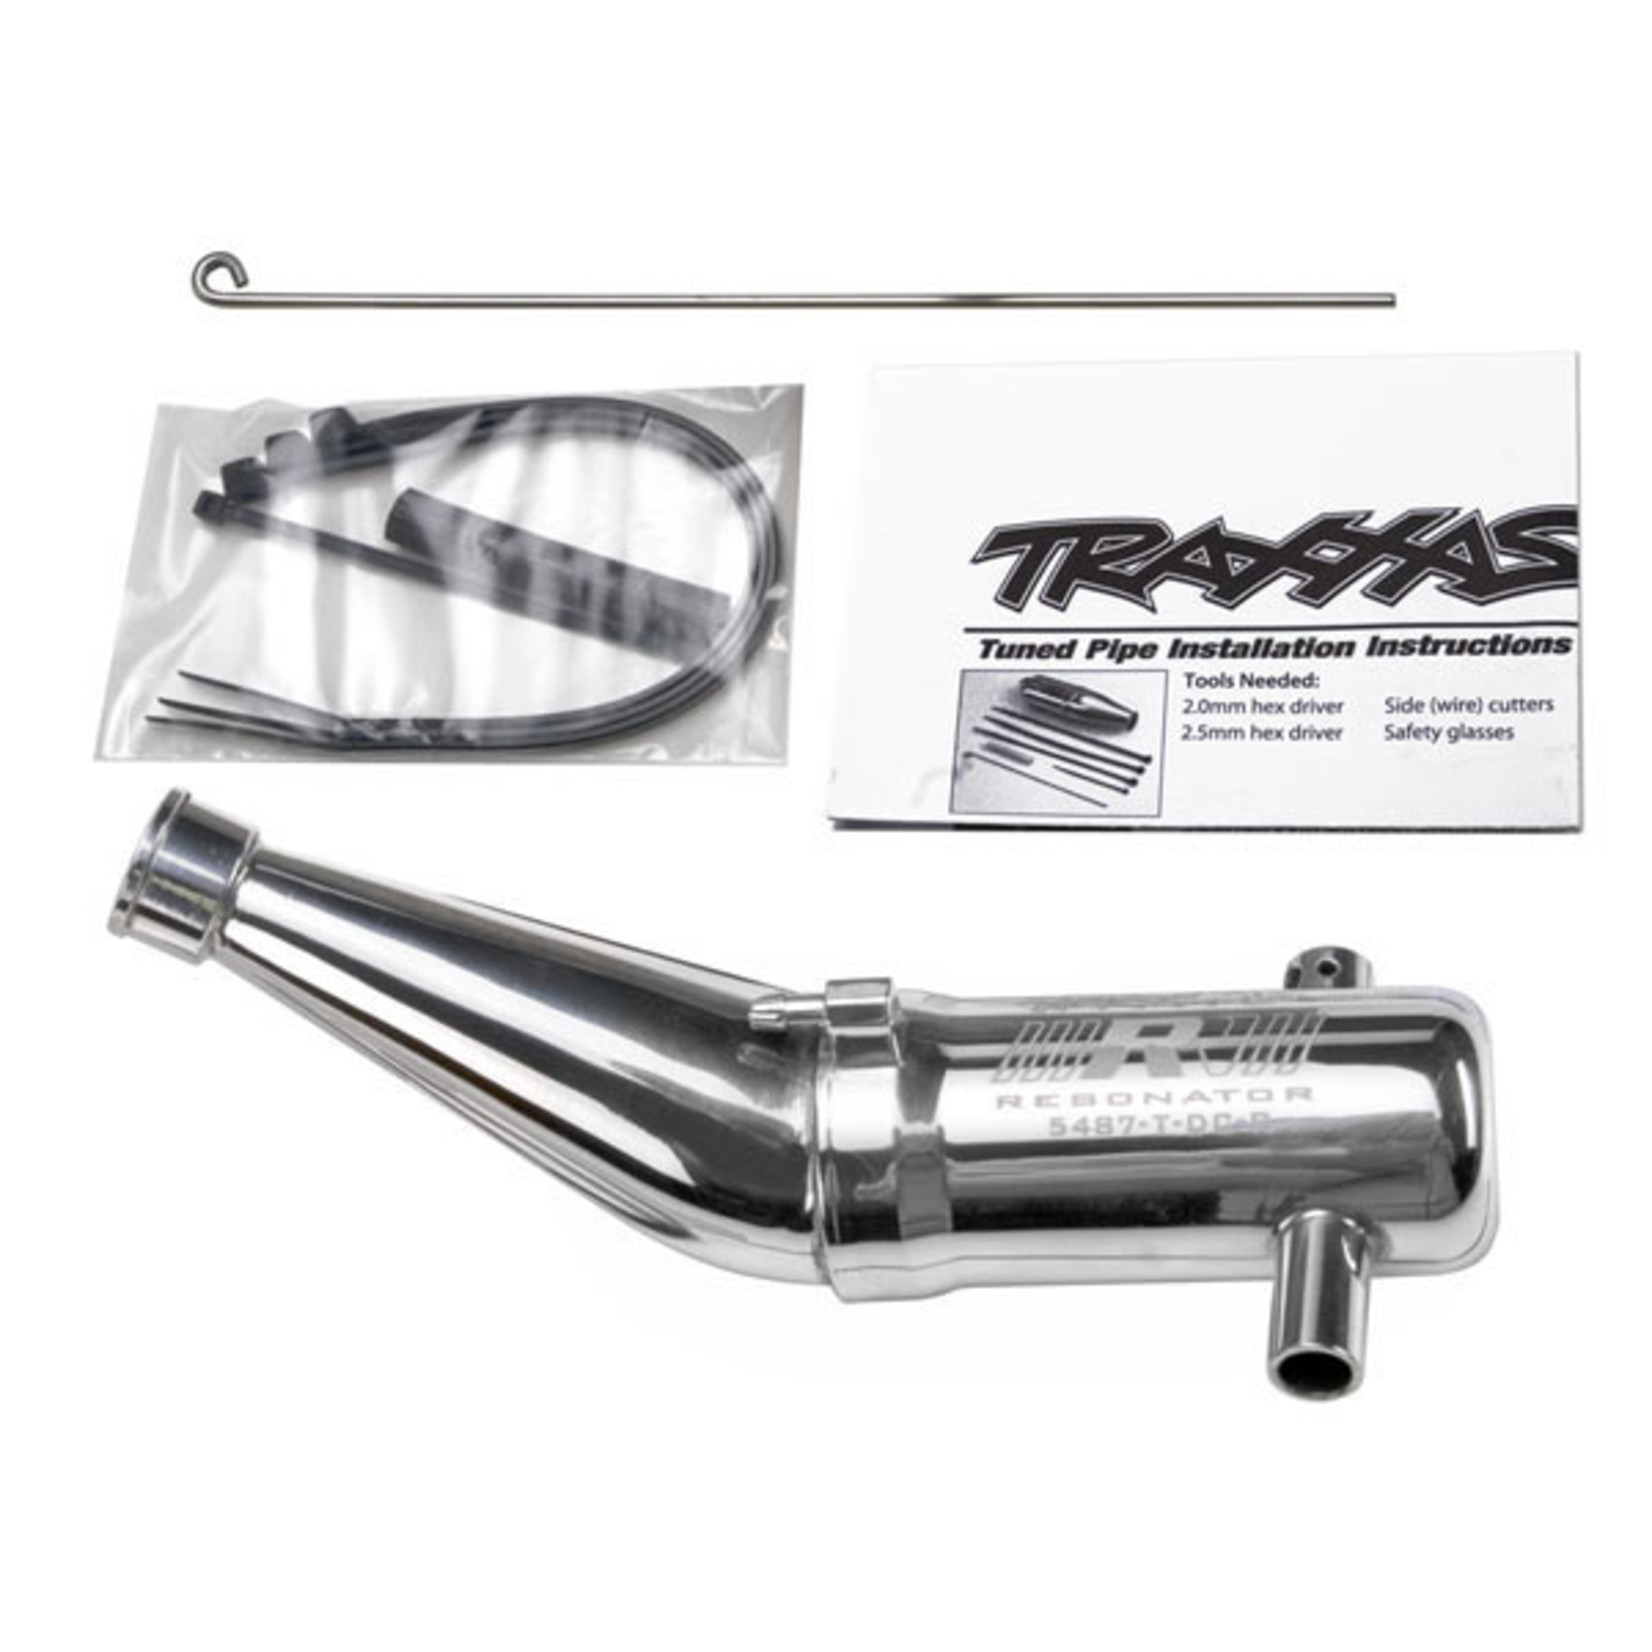 Traxxas 5487 - Tuned pipe, Resonator, R.O.A.R. legal (alum